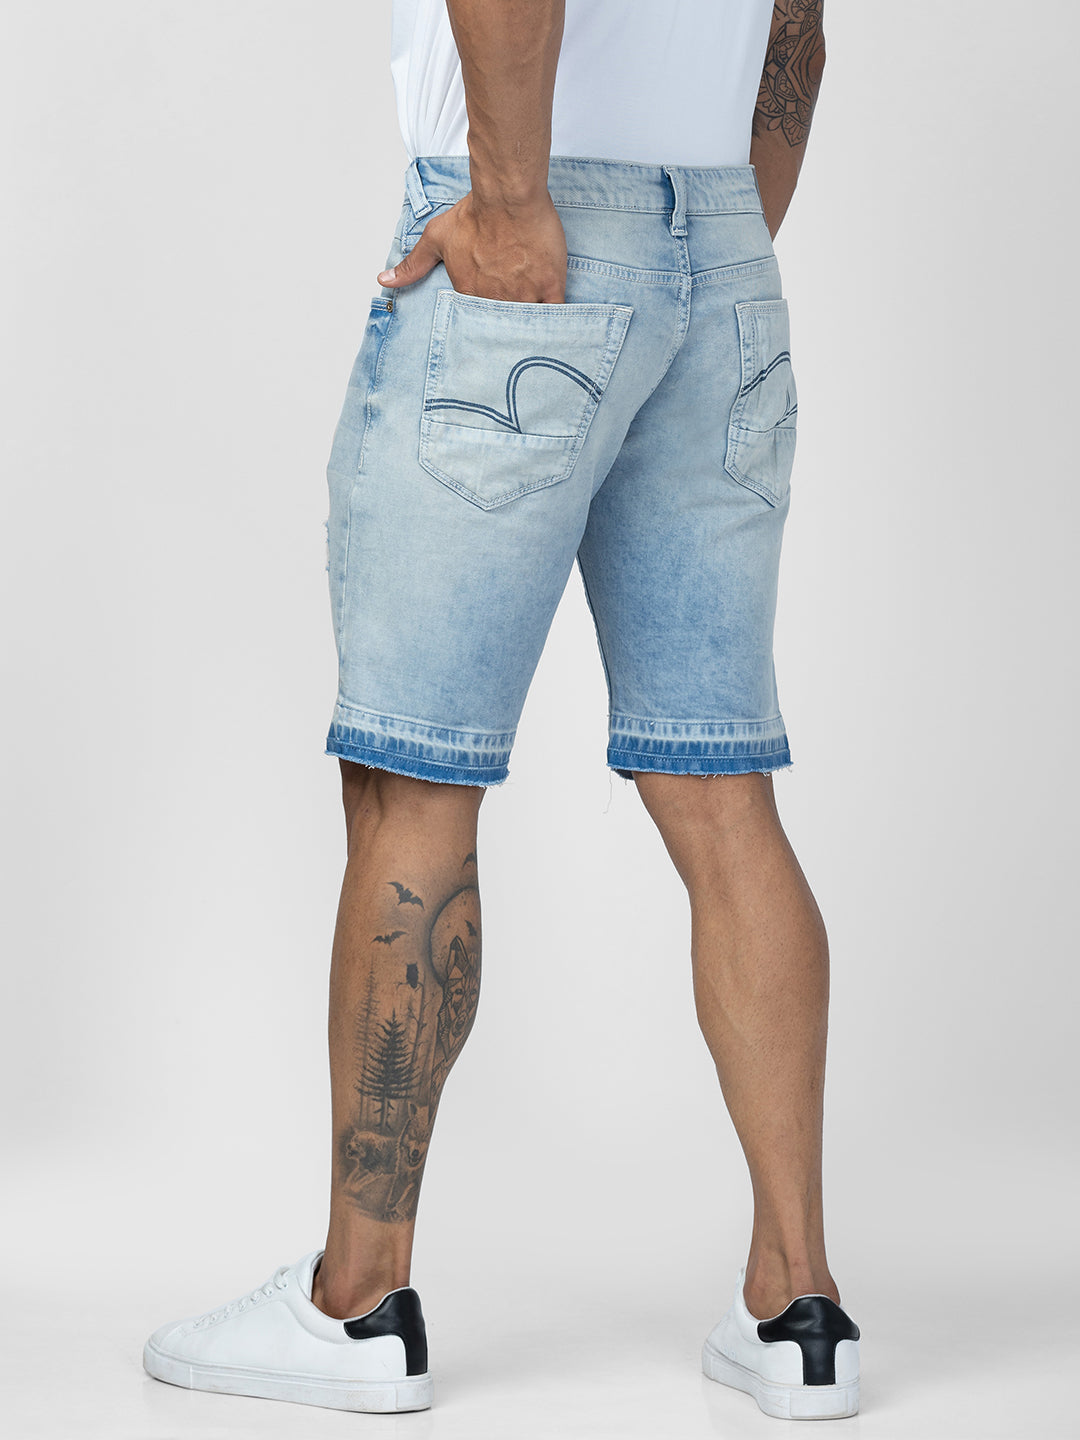 Men Ripped Jeans Mid Pants Casual Summer Shorts Denim Half Length Jeans  Shorts | eBay